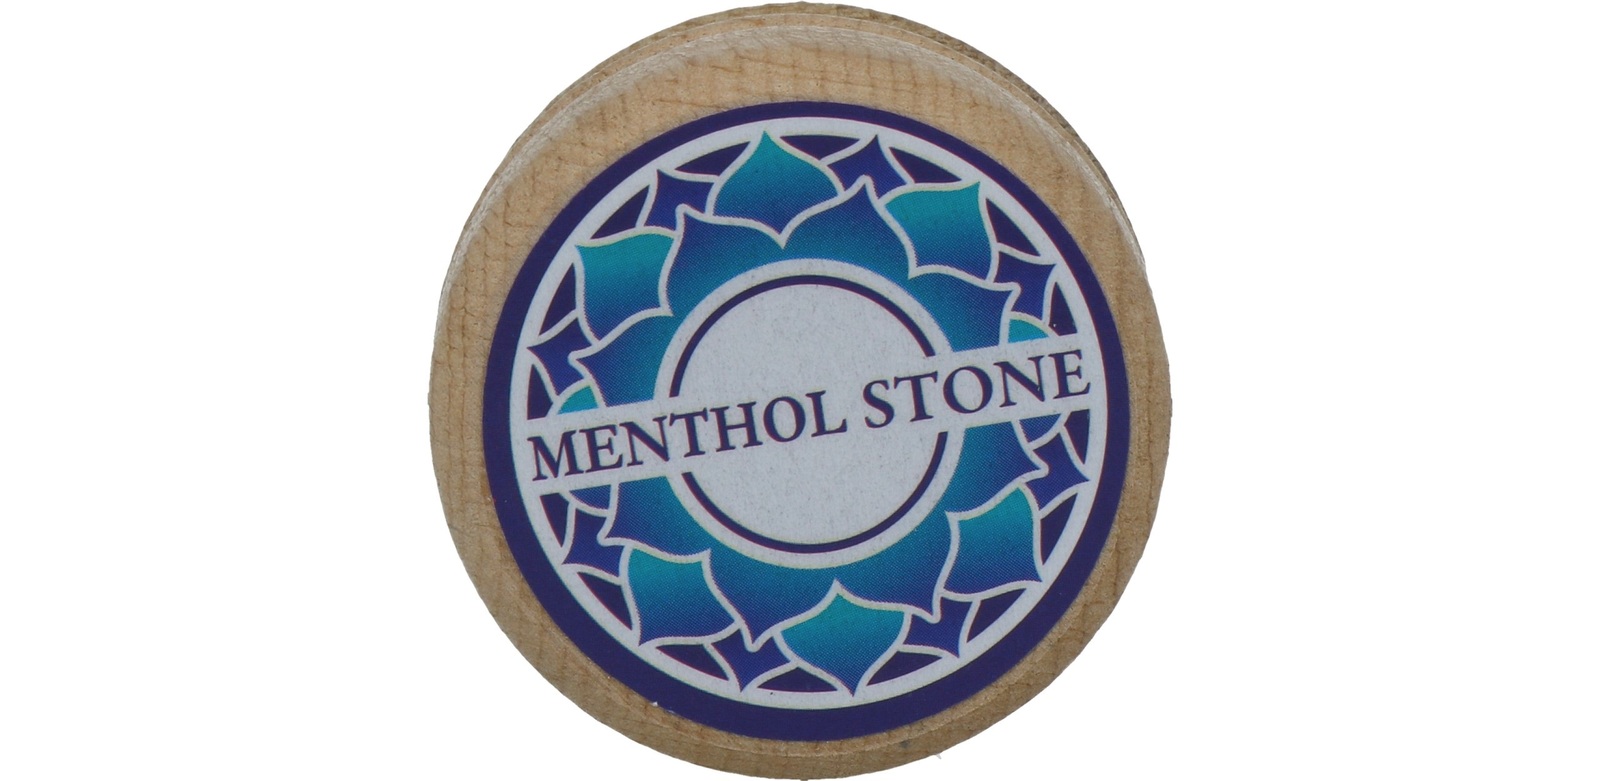 Menthol Stone